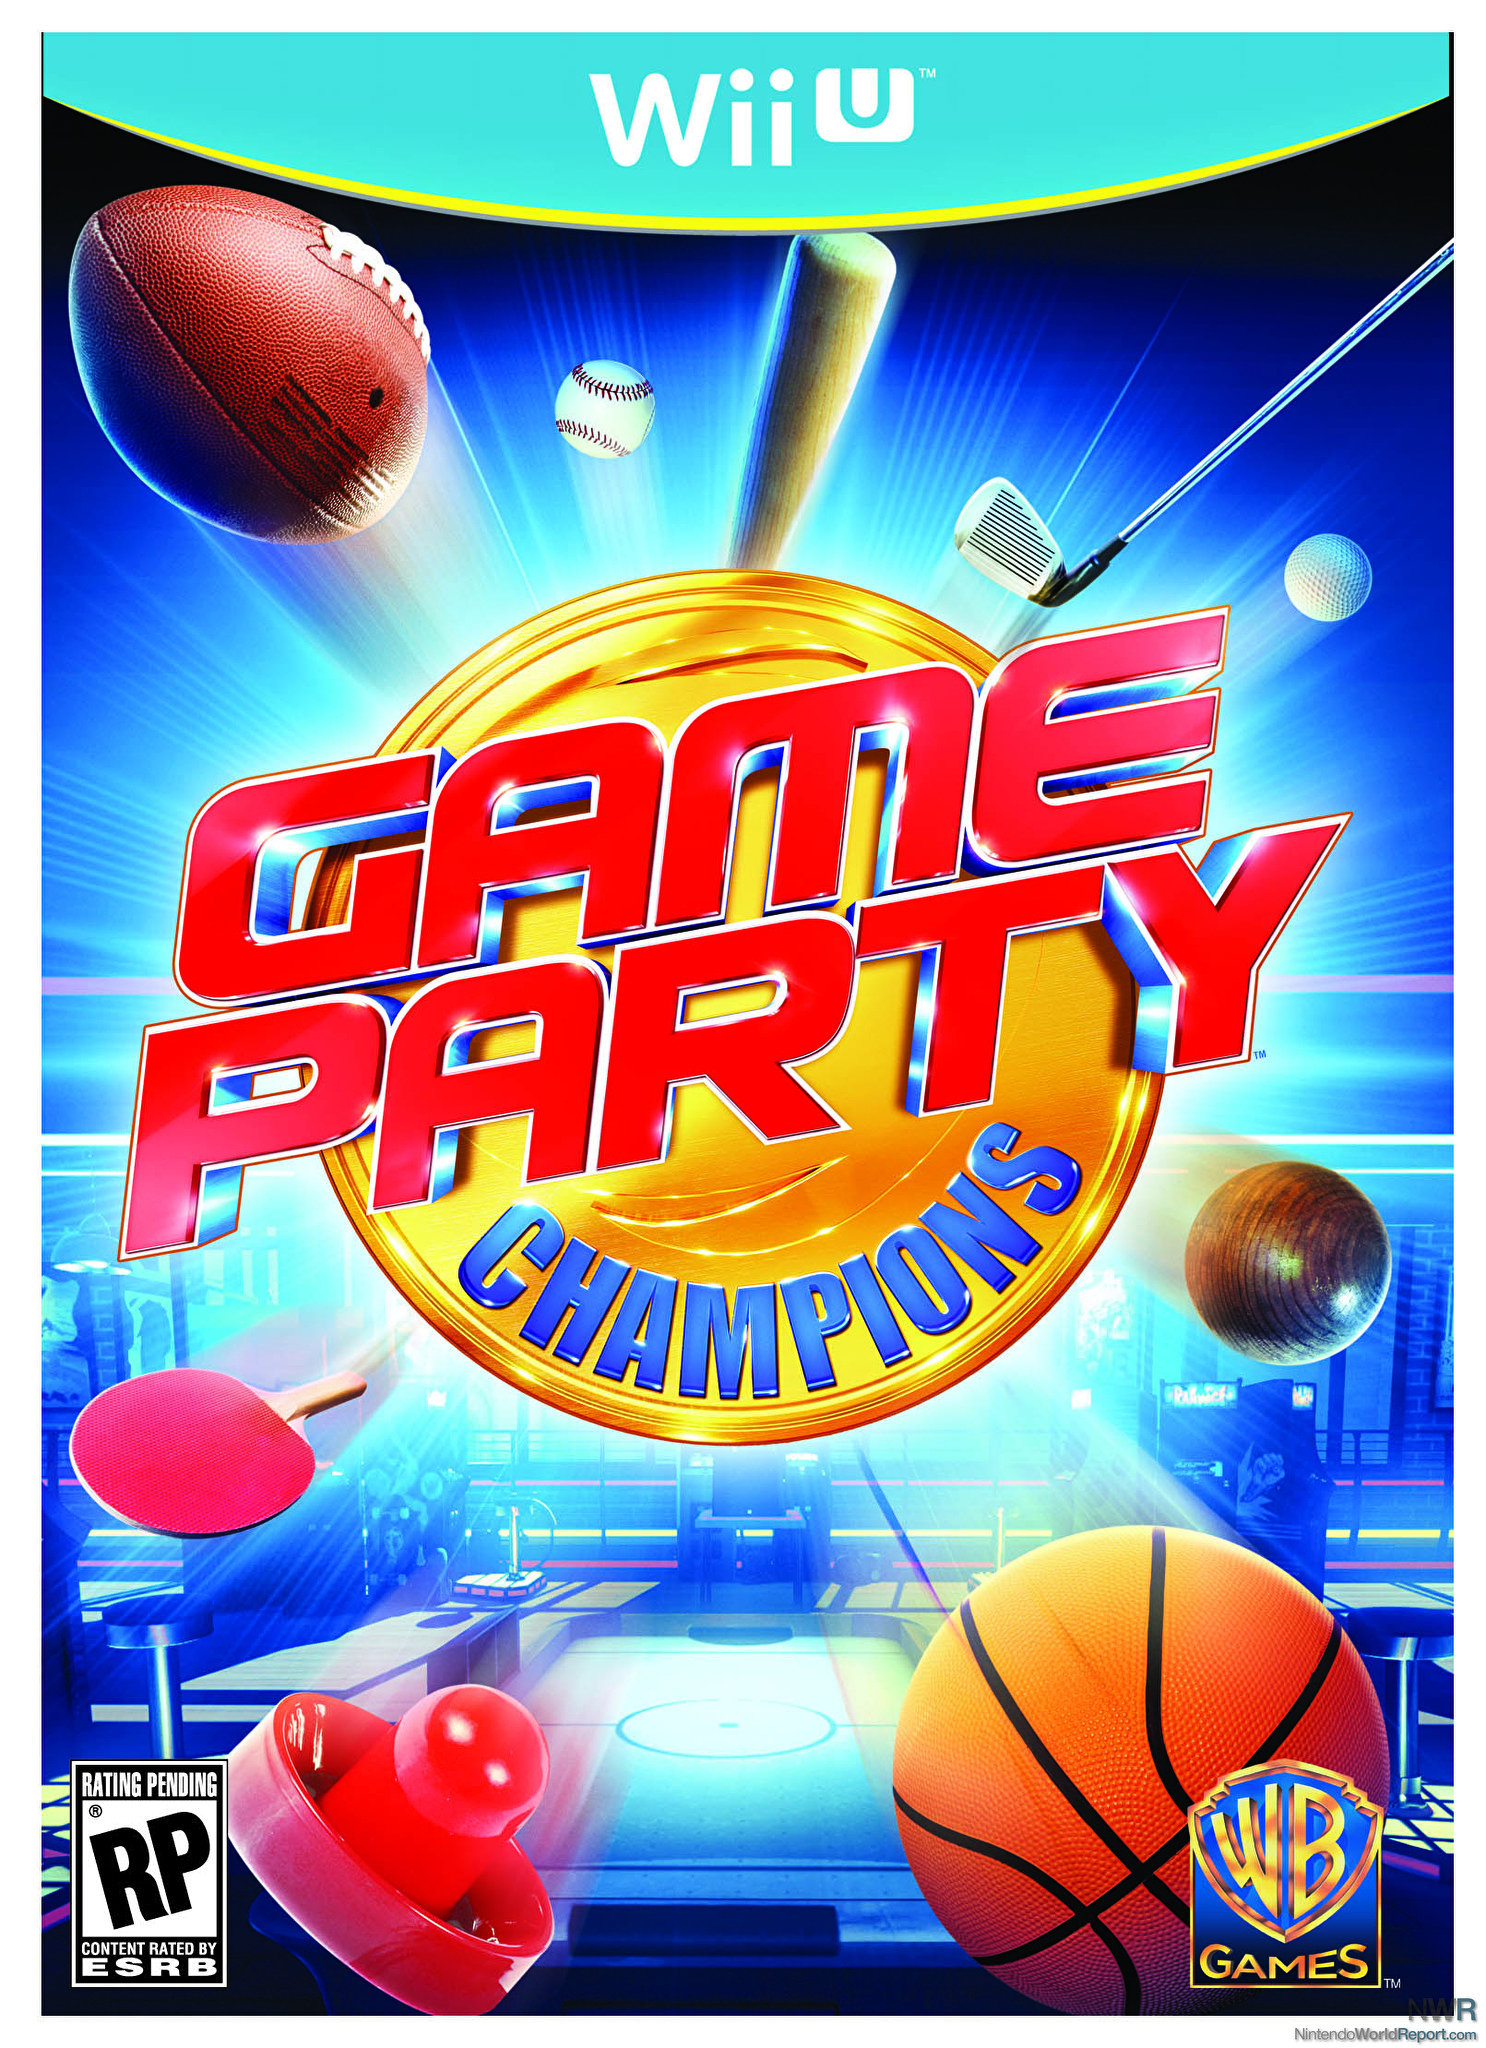 Game Party Champions Wii U Box Art Revealed - News - Nintendo World Report